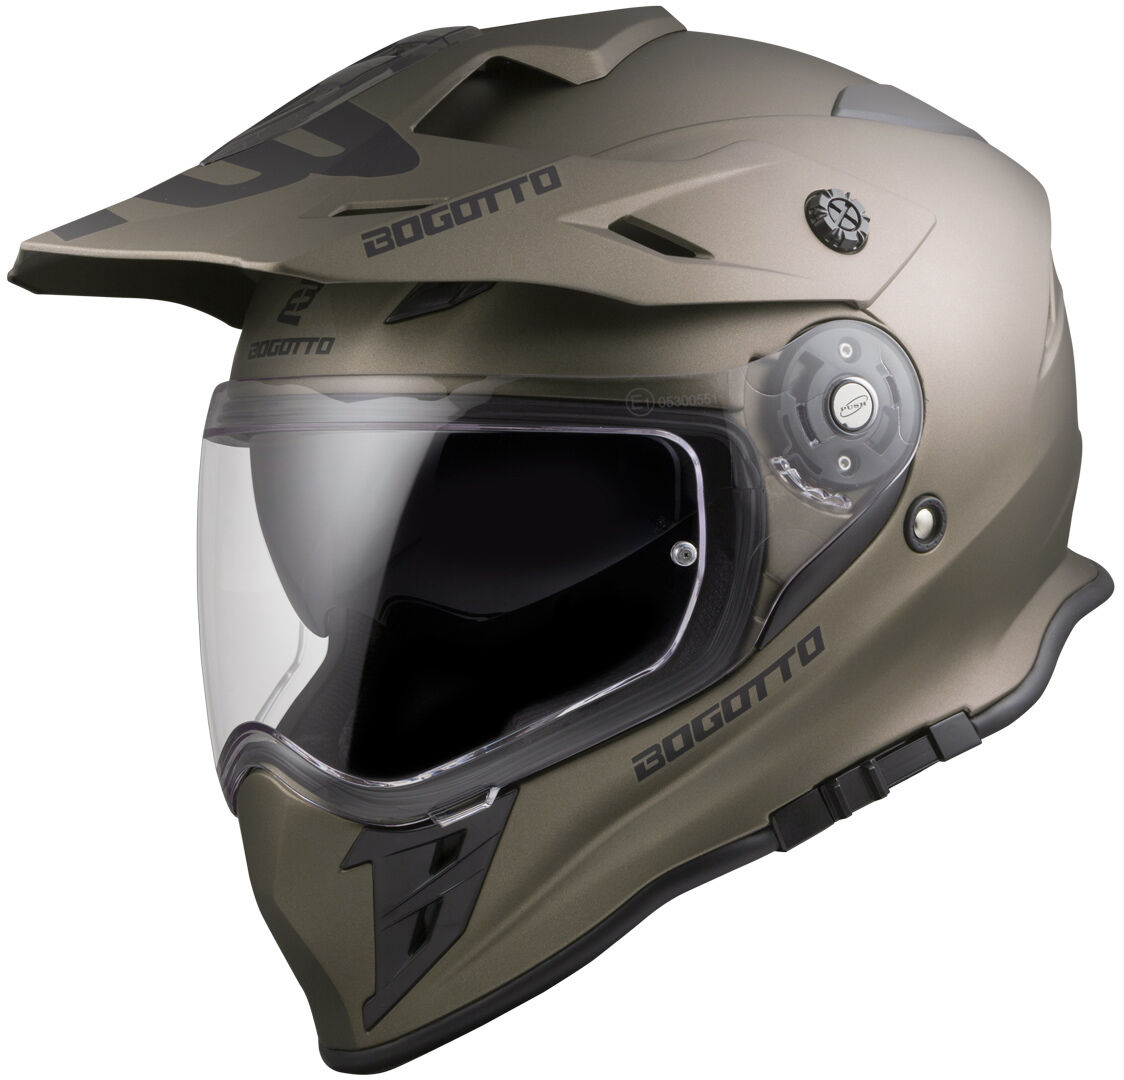 Bogotto V331 Enduro Helmet  - Brown